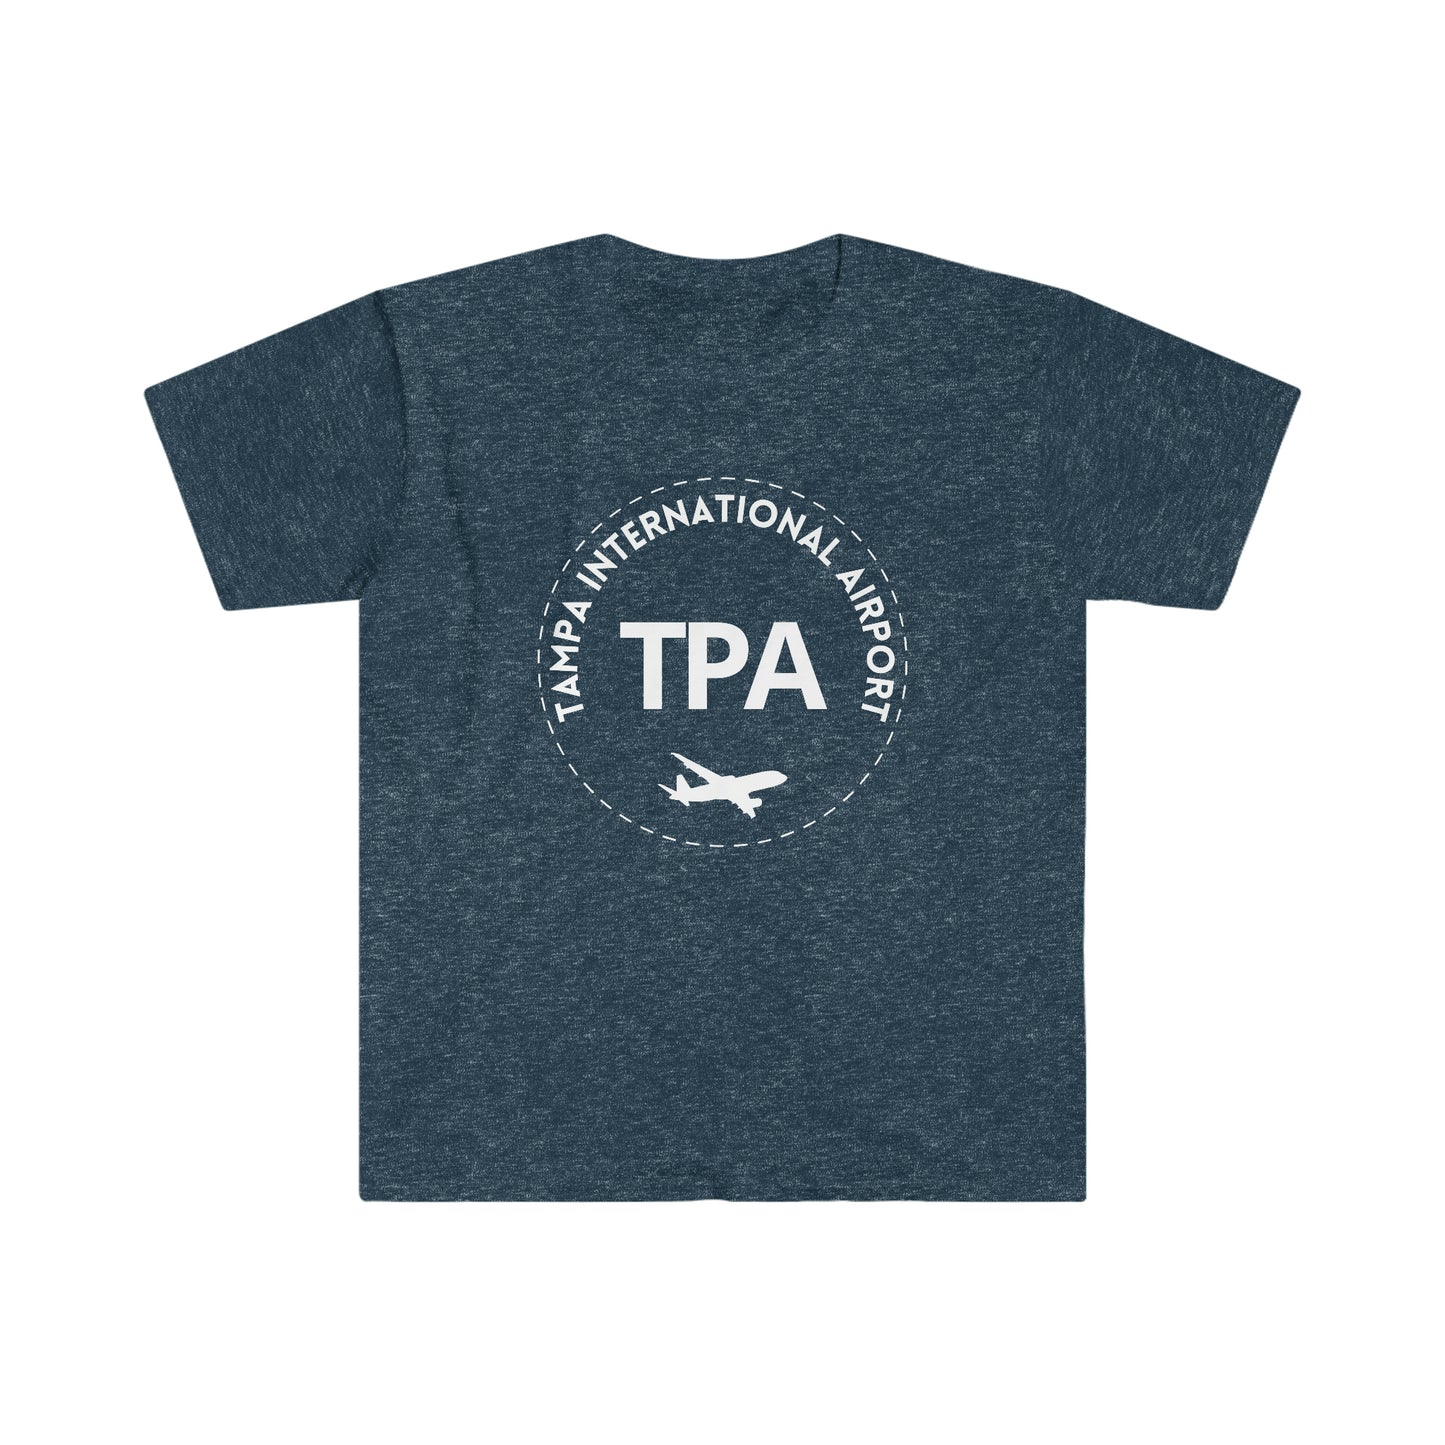 Tampa Airport TPA Swag Aviation & Travel T-Shirt